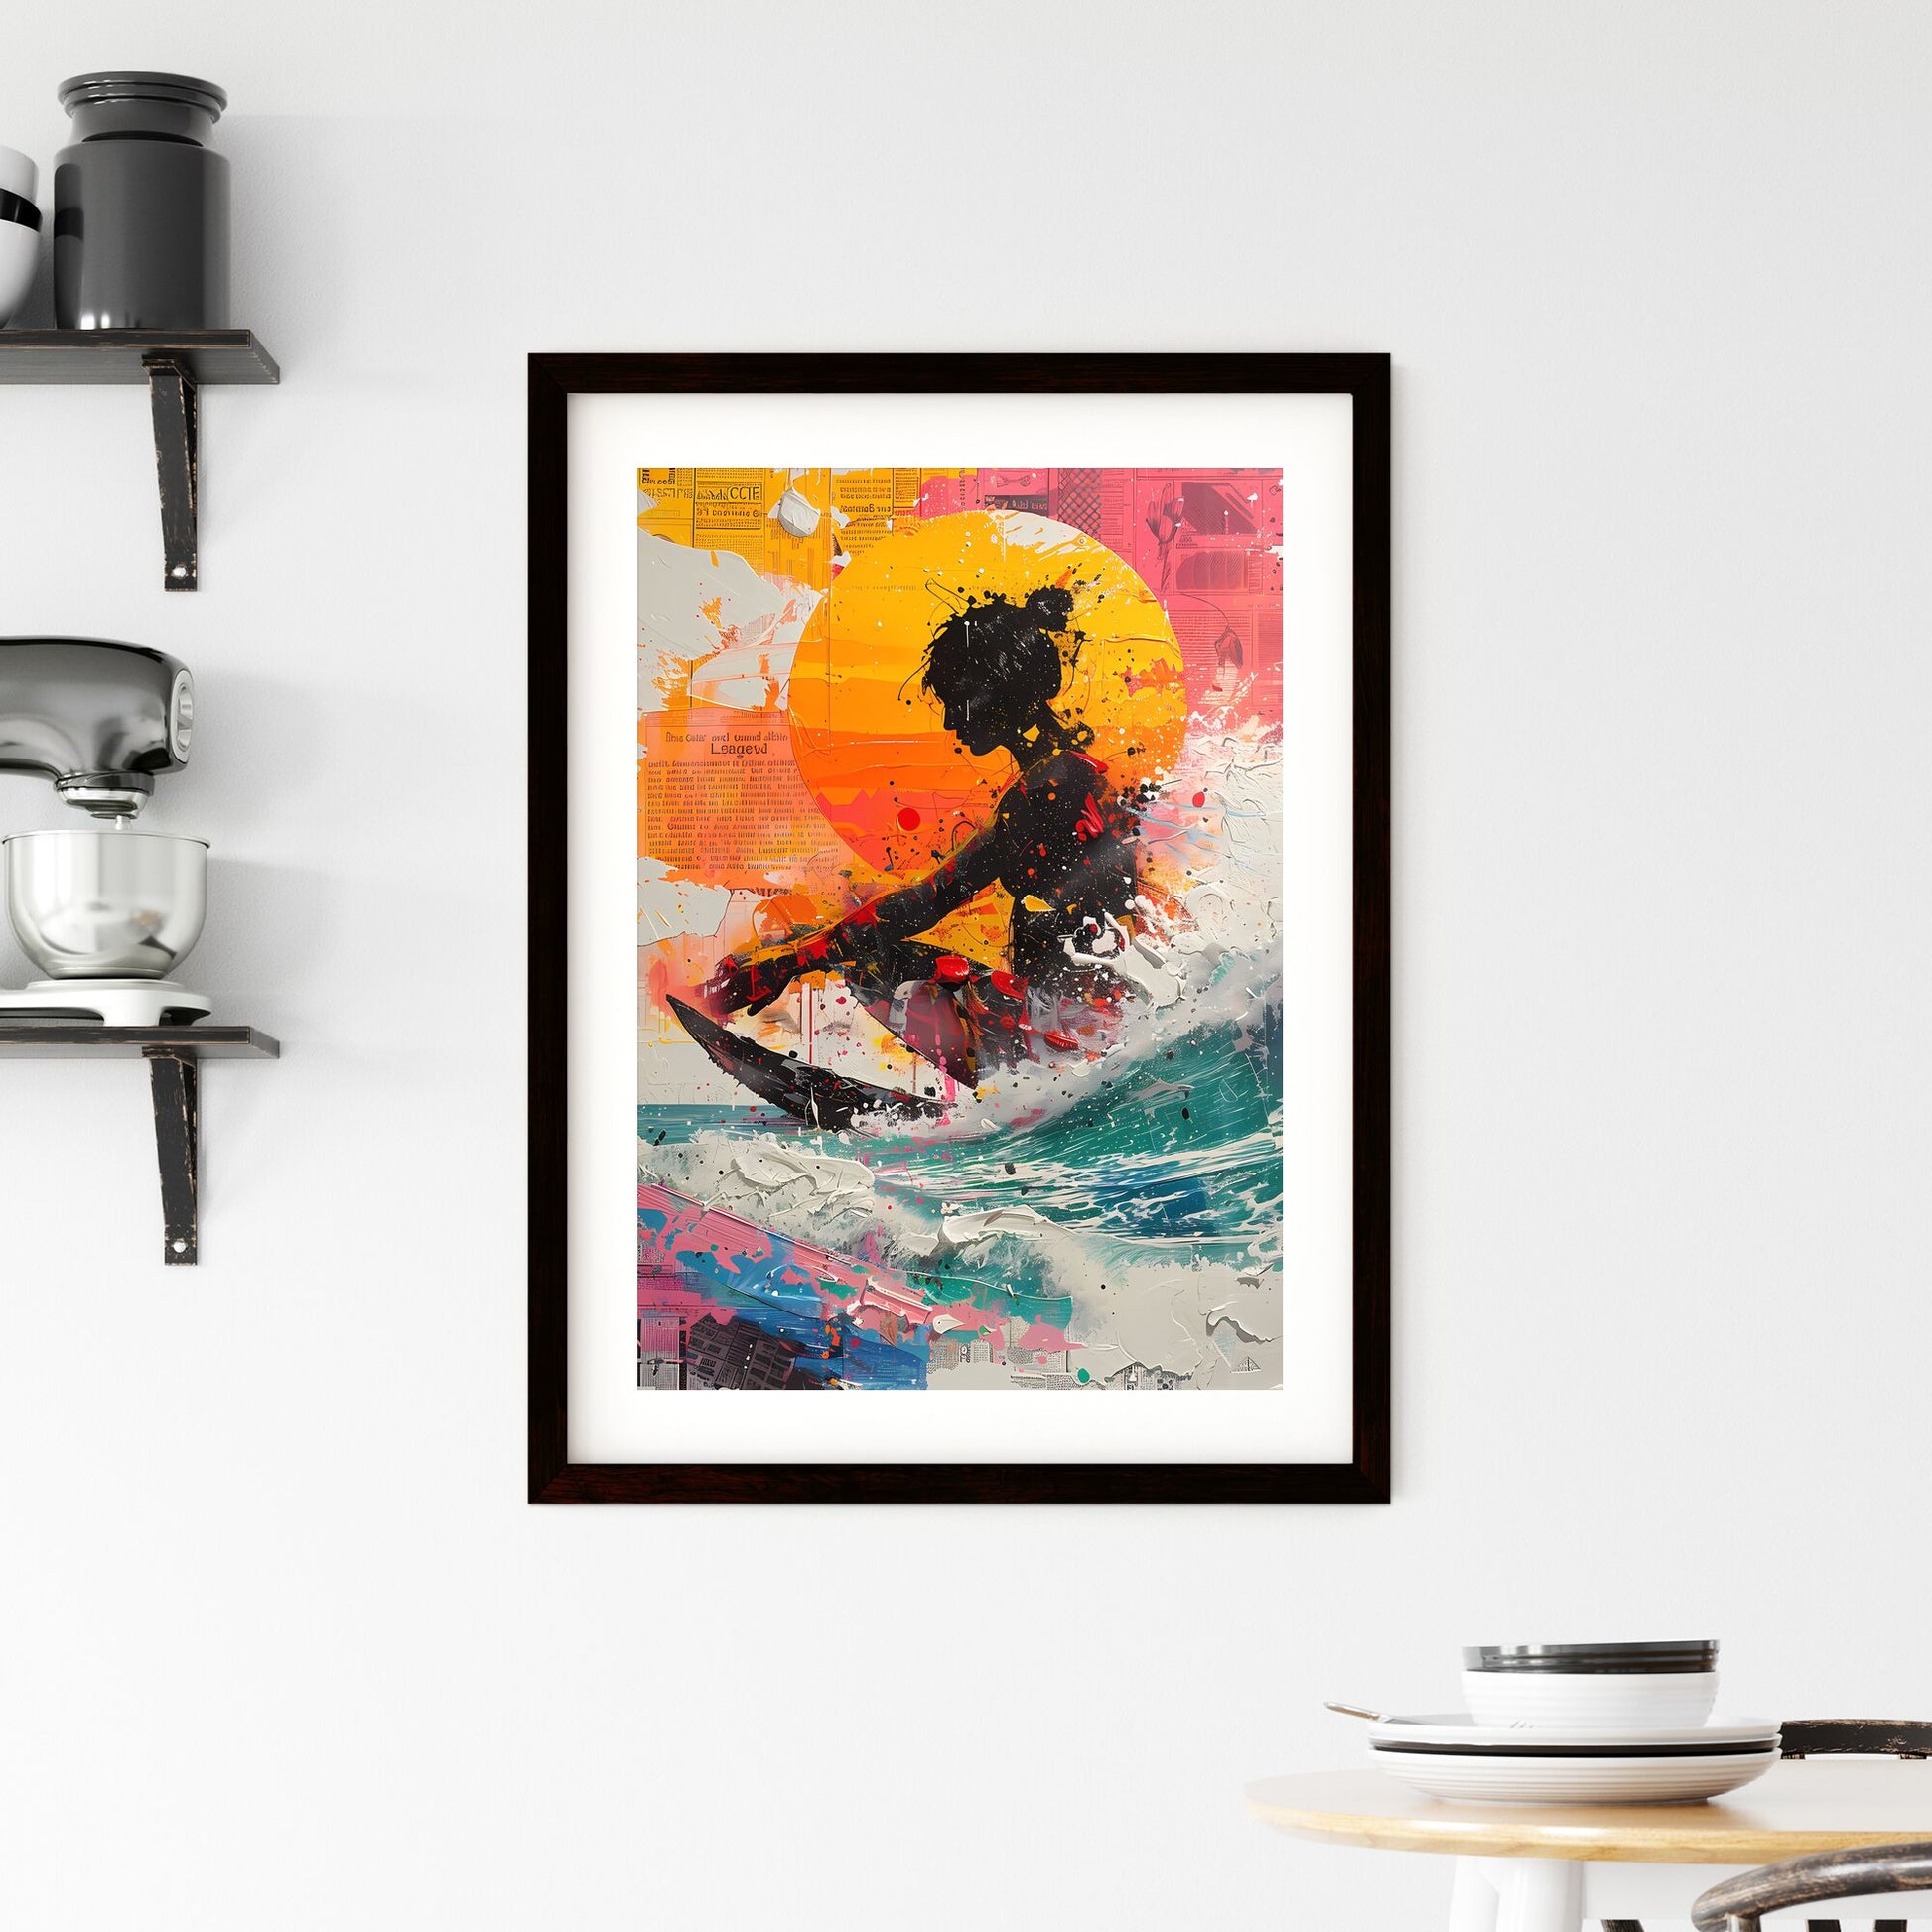 Birth of Venus Screen Print Trash Pop Art Painting Vibrant Surfing Woman Default Title